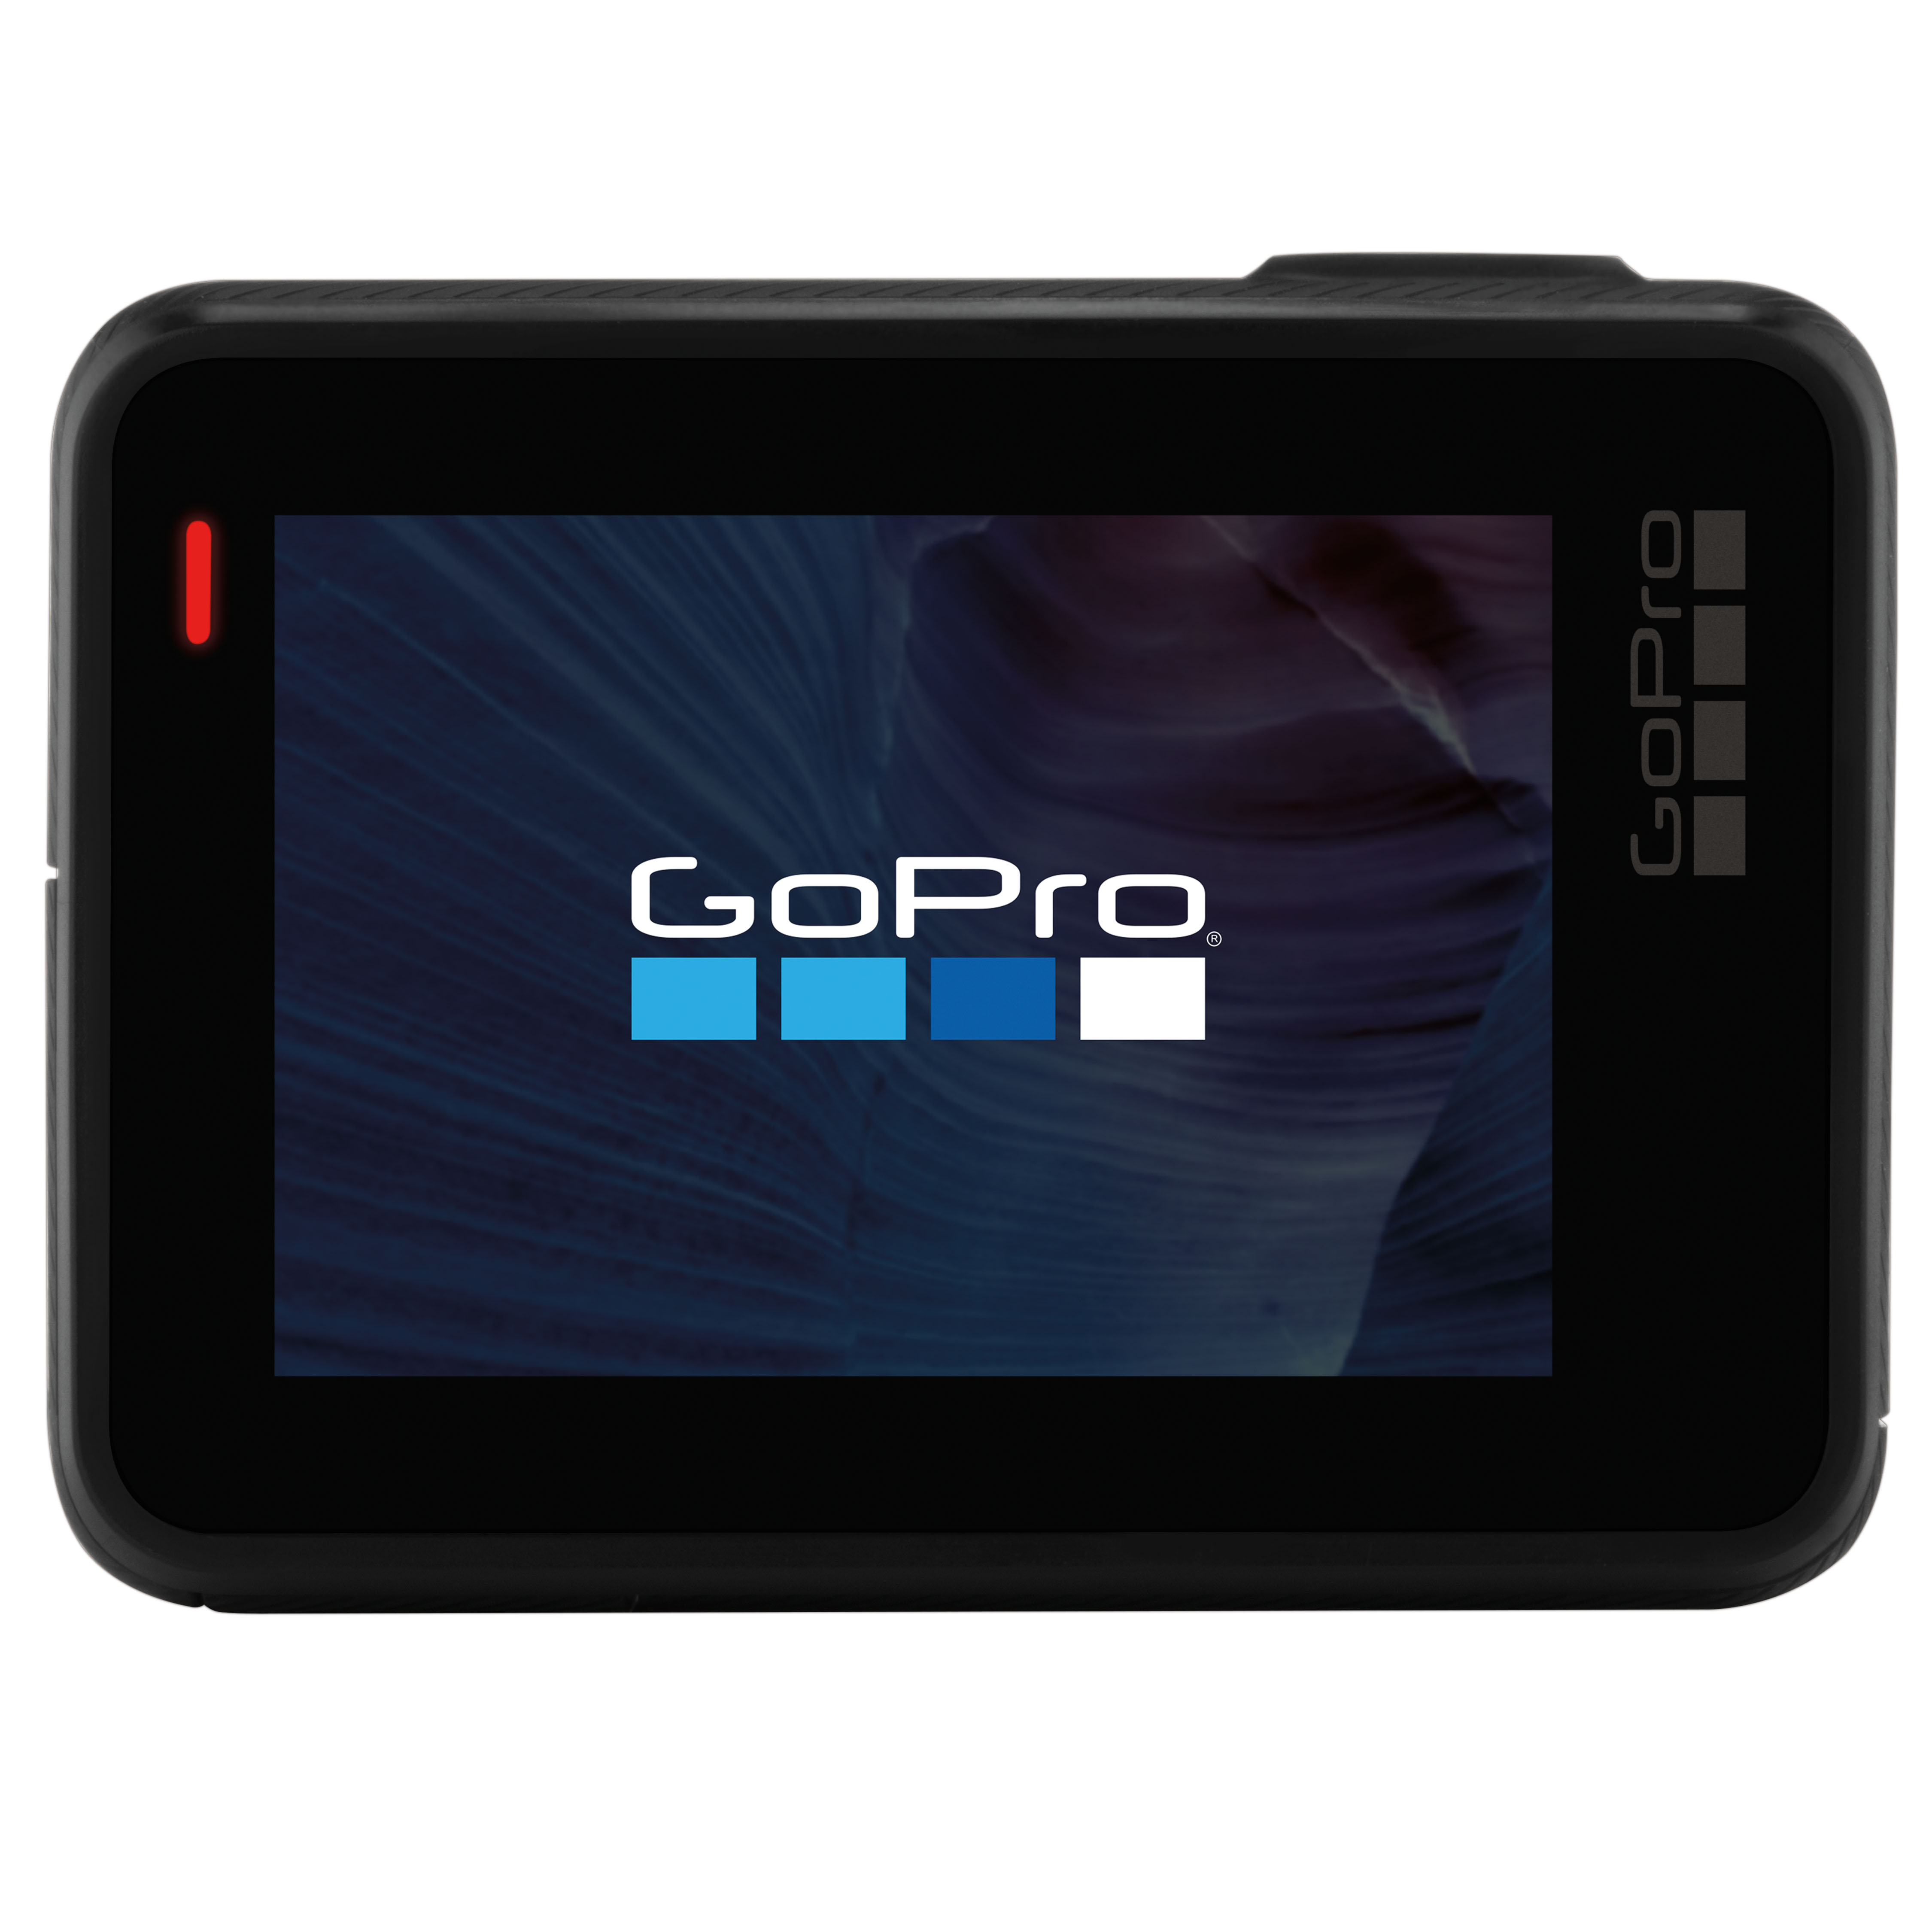 камера GoPro Hero5